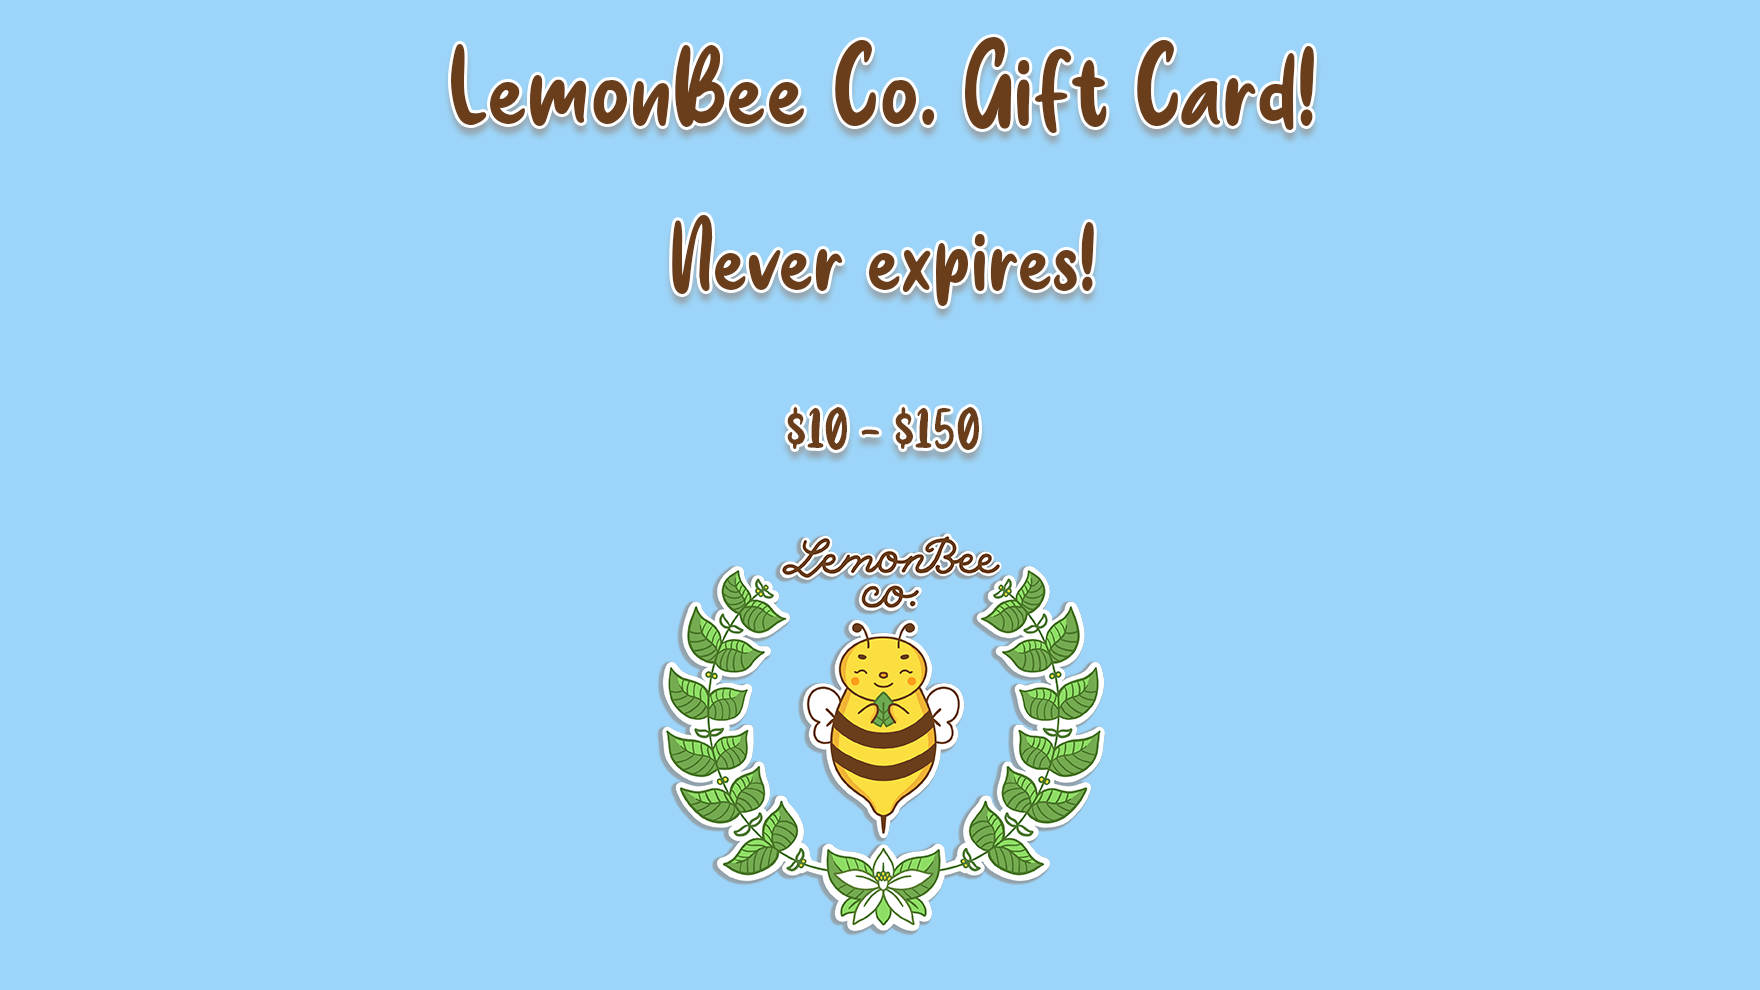 LemonBee Co. Gift Card